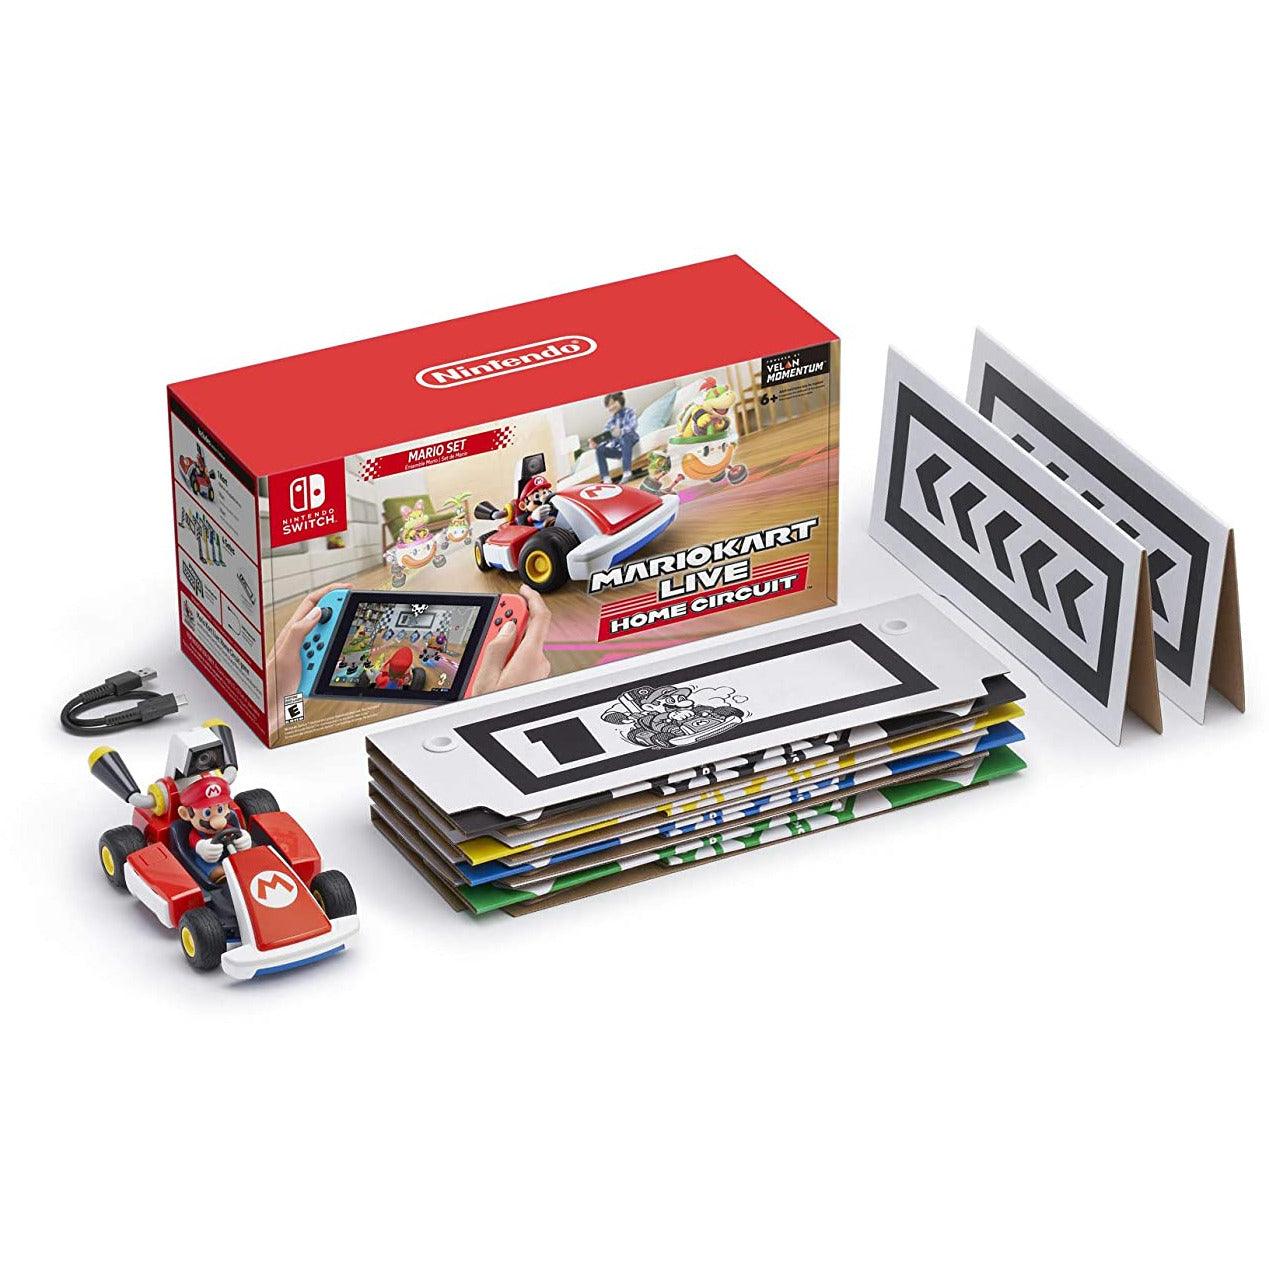 Mario Kart Live Home Circuit -Mario Set - Nintendo Switch